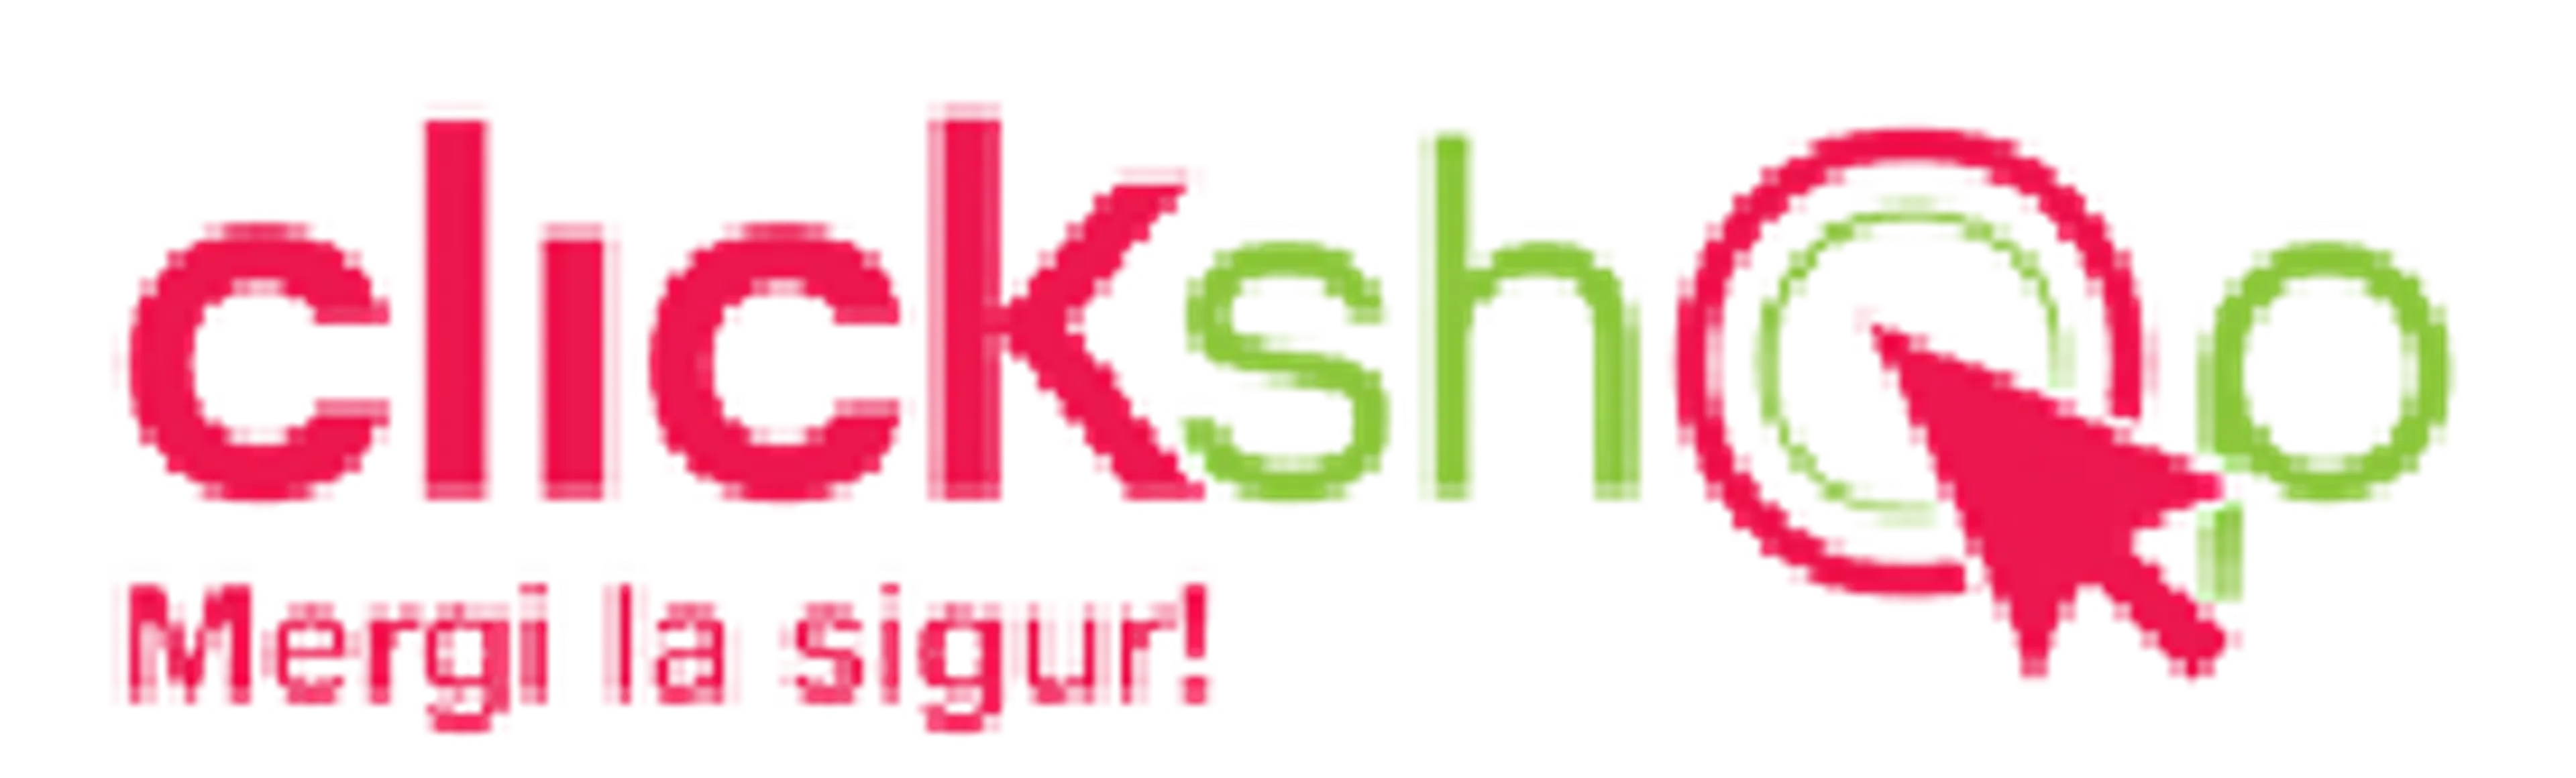 CLICKSHOP logo